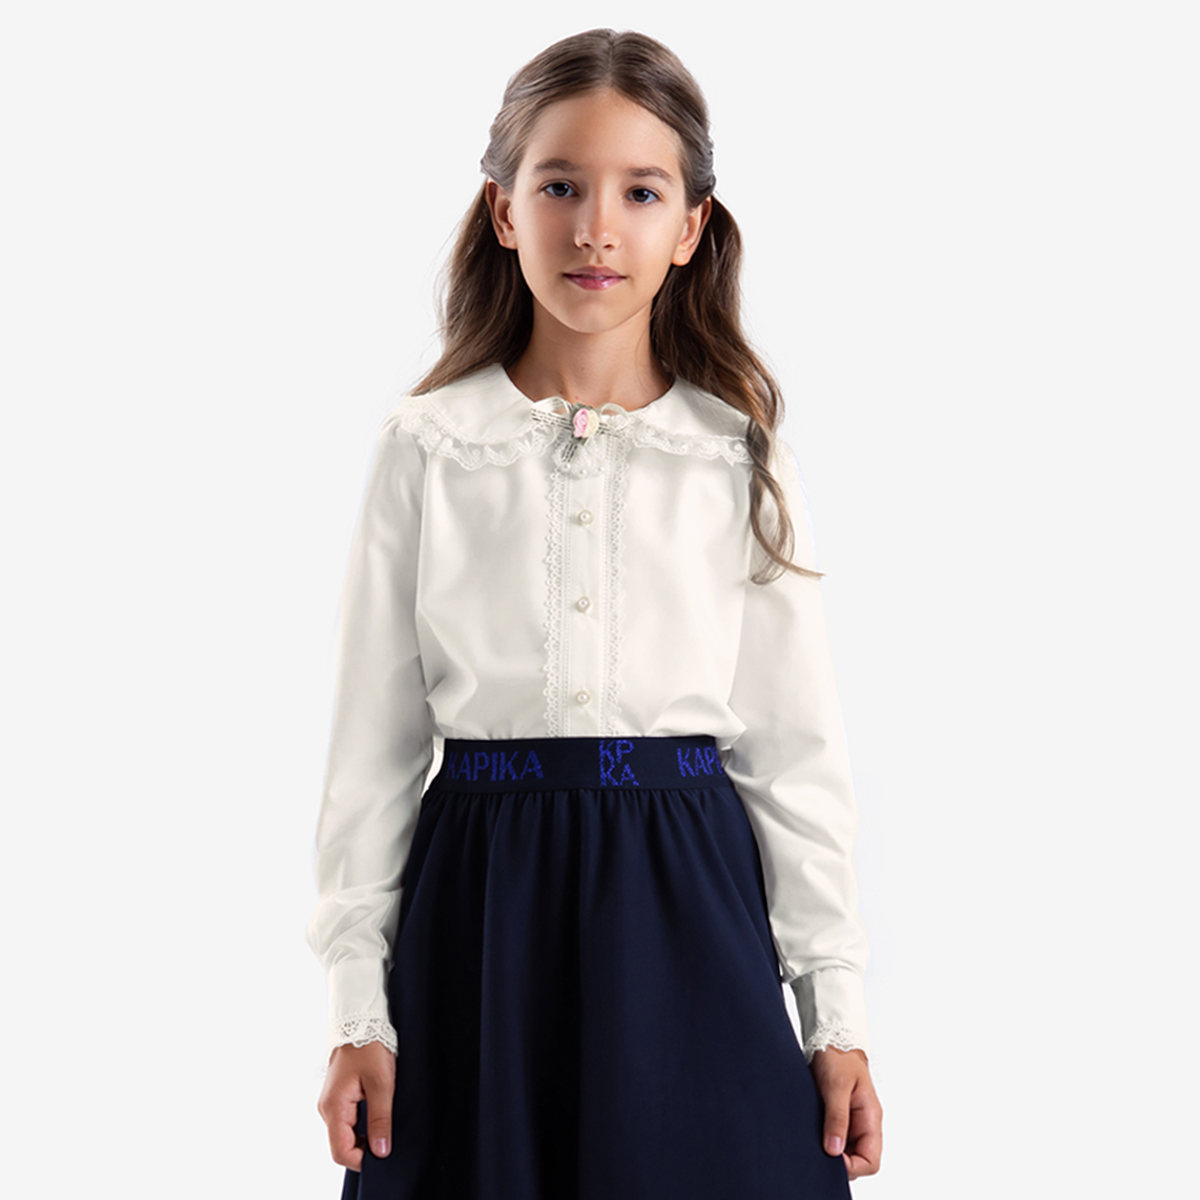 Блузка детская Kapika IJGCB01-02, цвет экрю, размер 158 блузка женская вилена размер 46